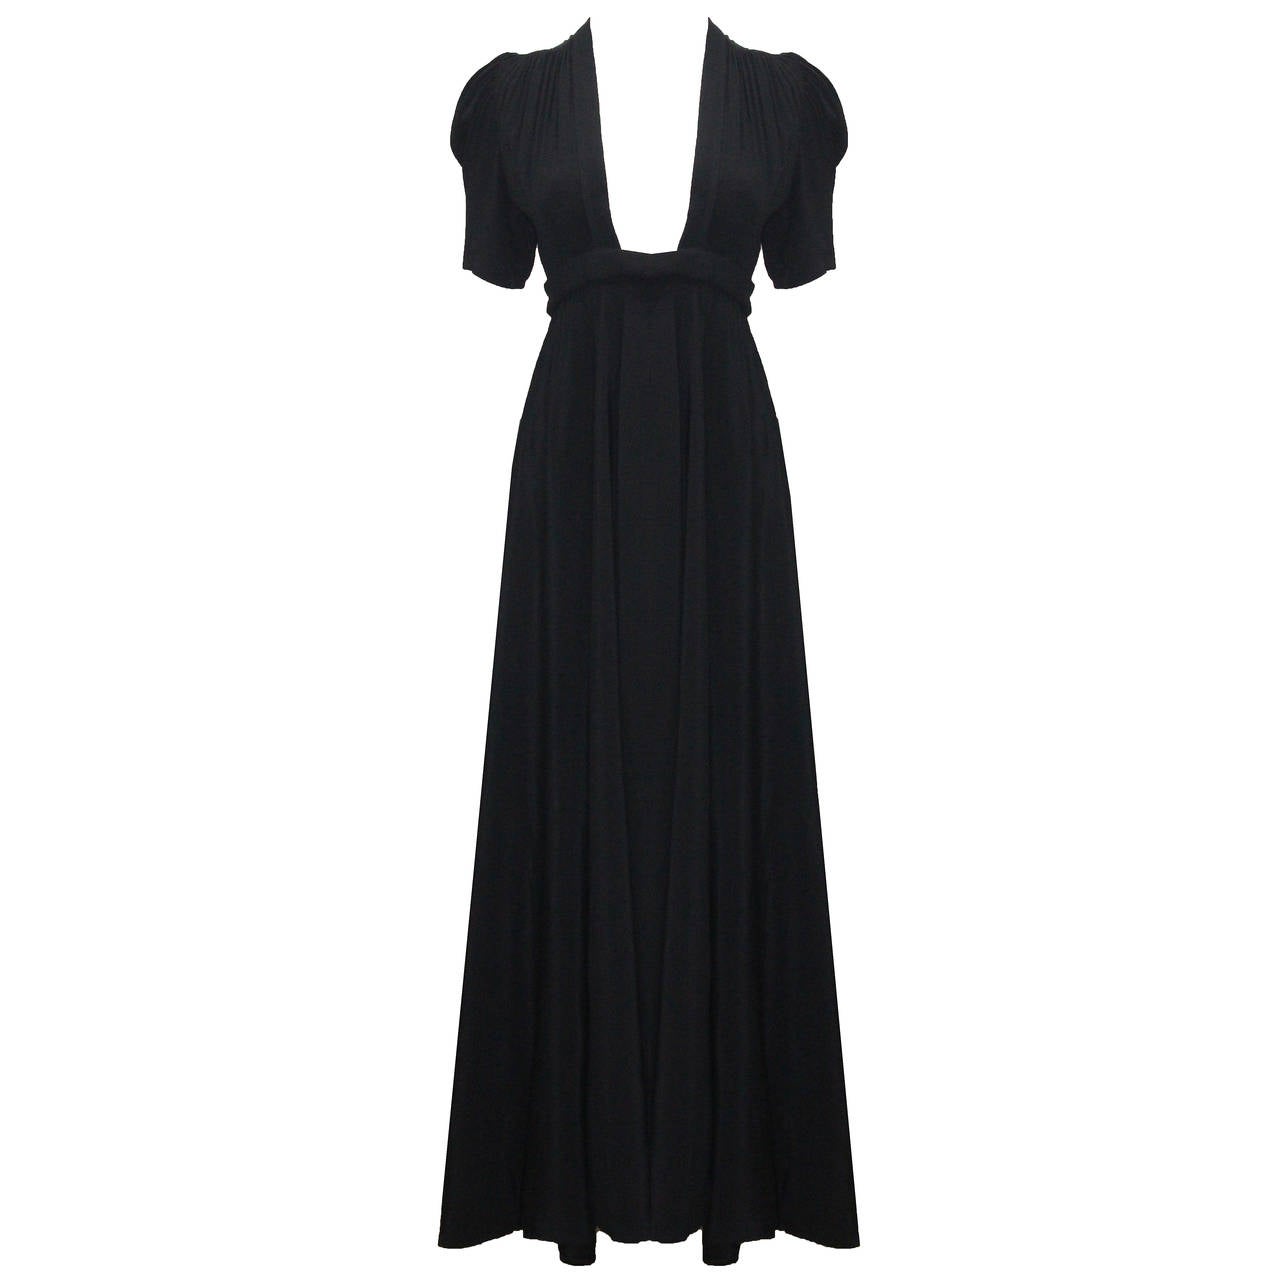 The 1960s Bridget Bardot Low Plunge Wrap Dress by Ossie Clark for Quorum